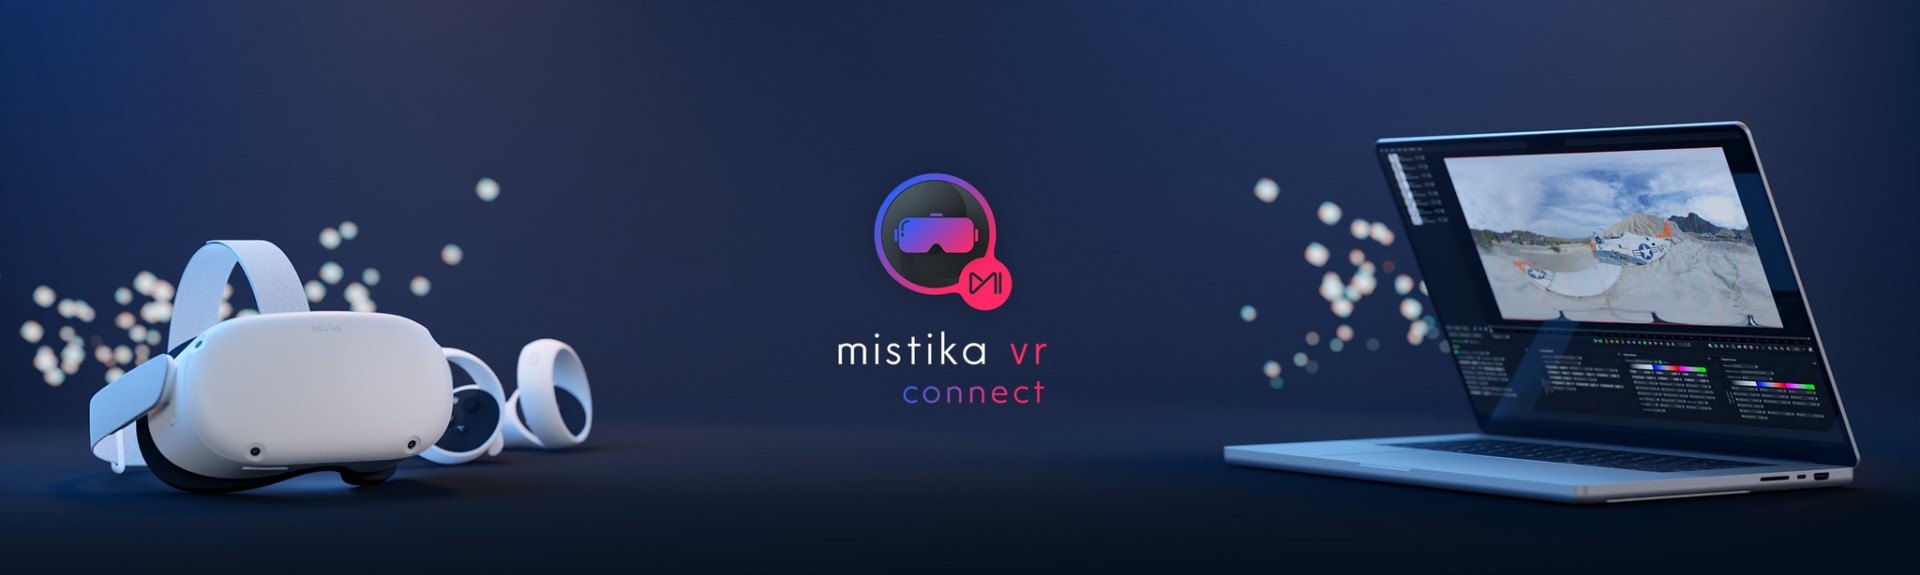 Mistika VR Connect